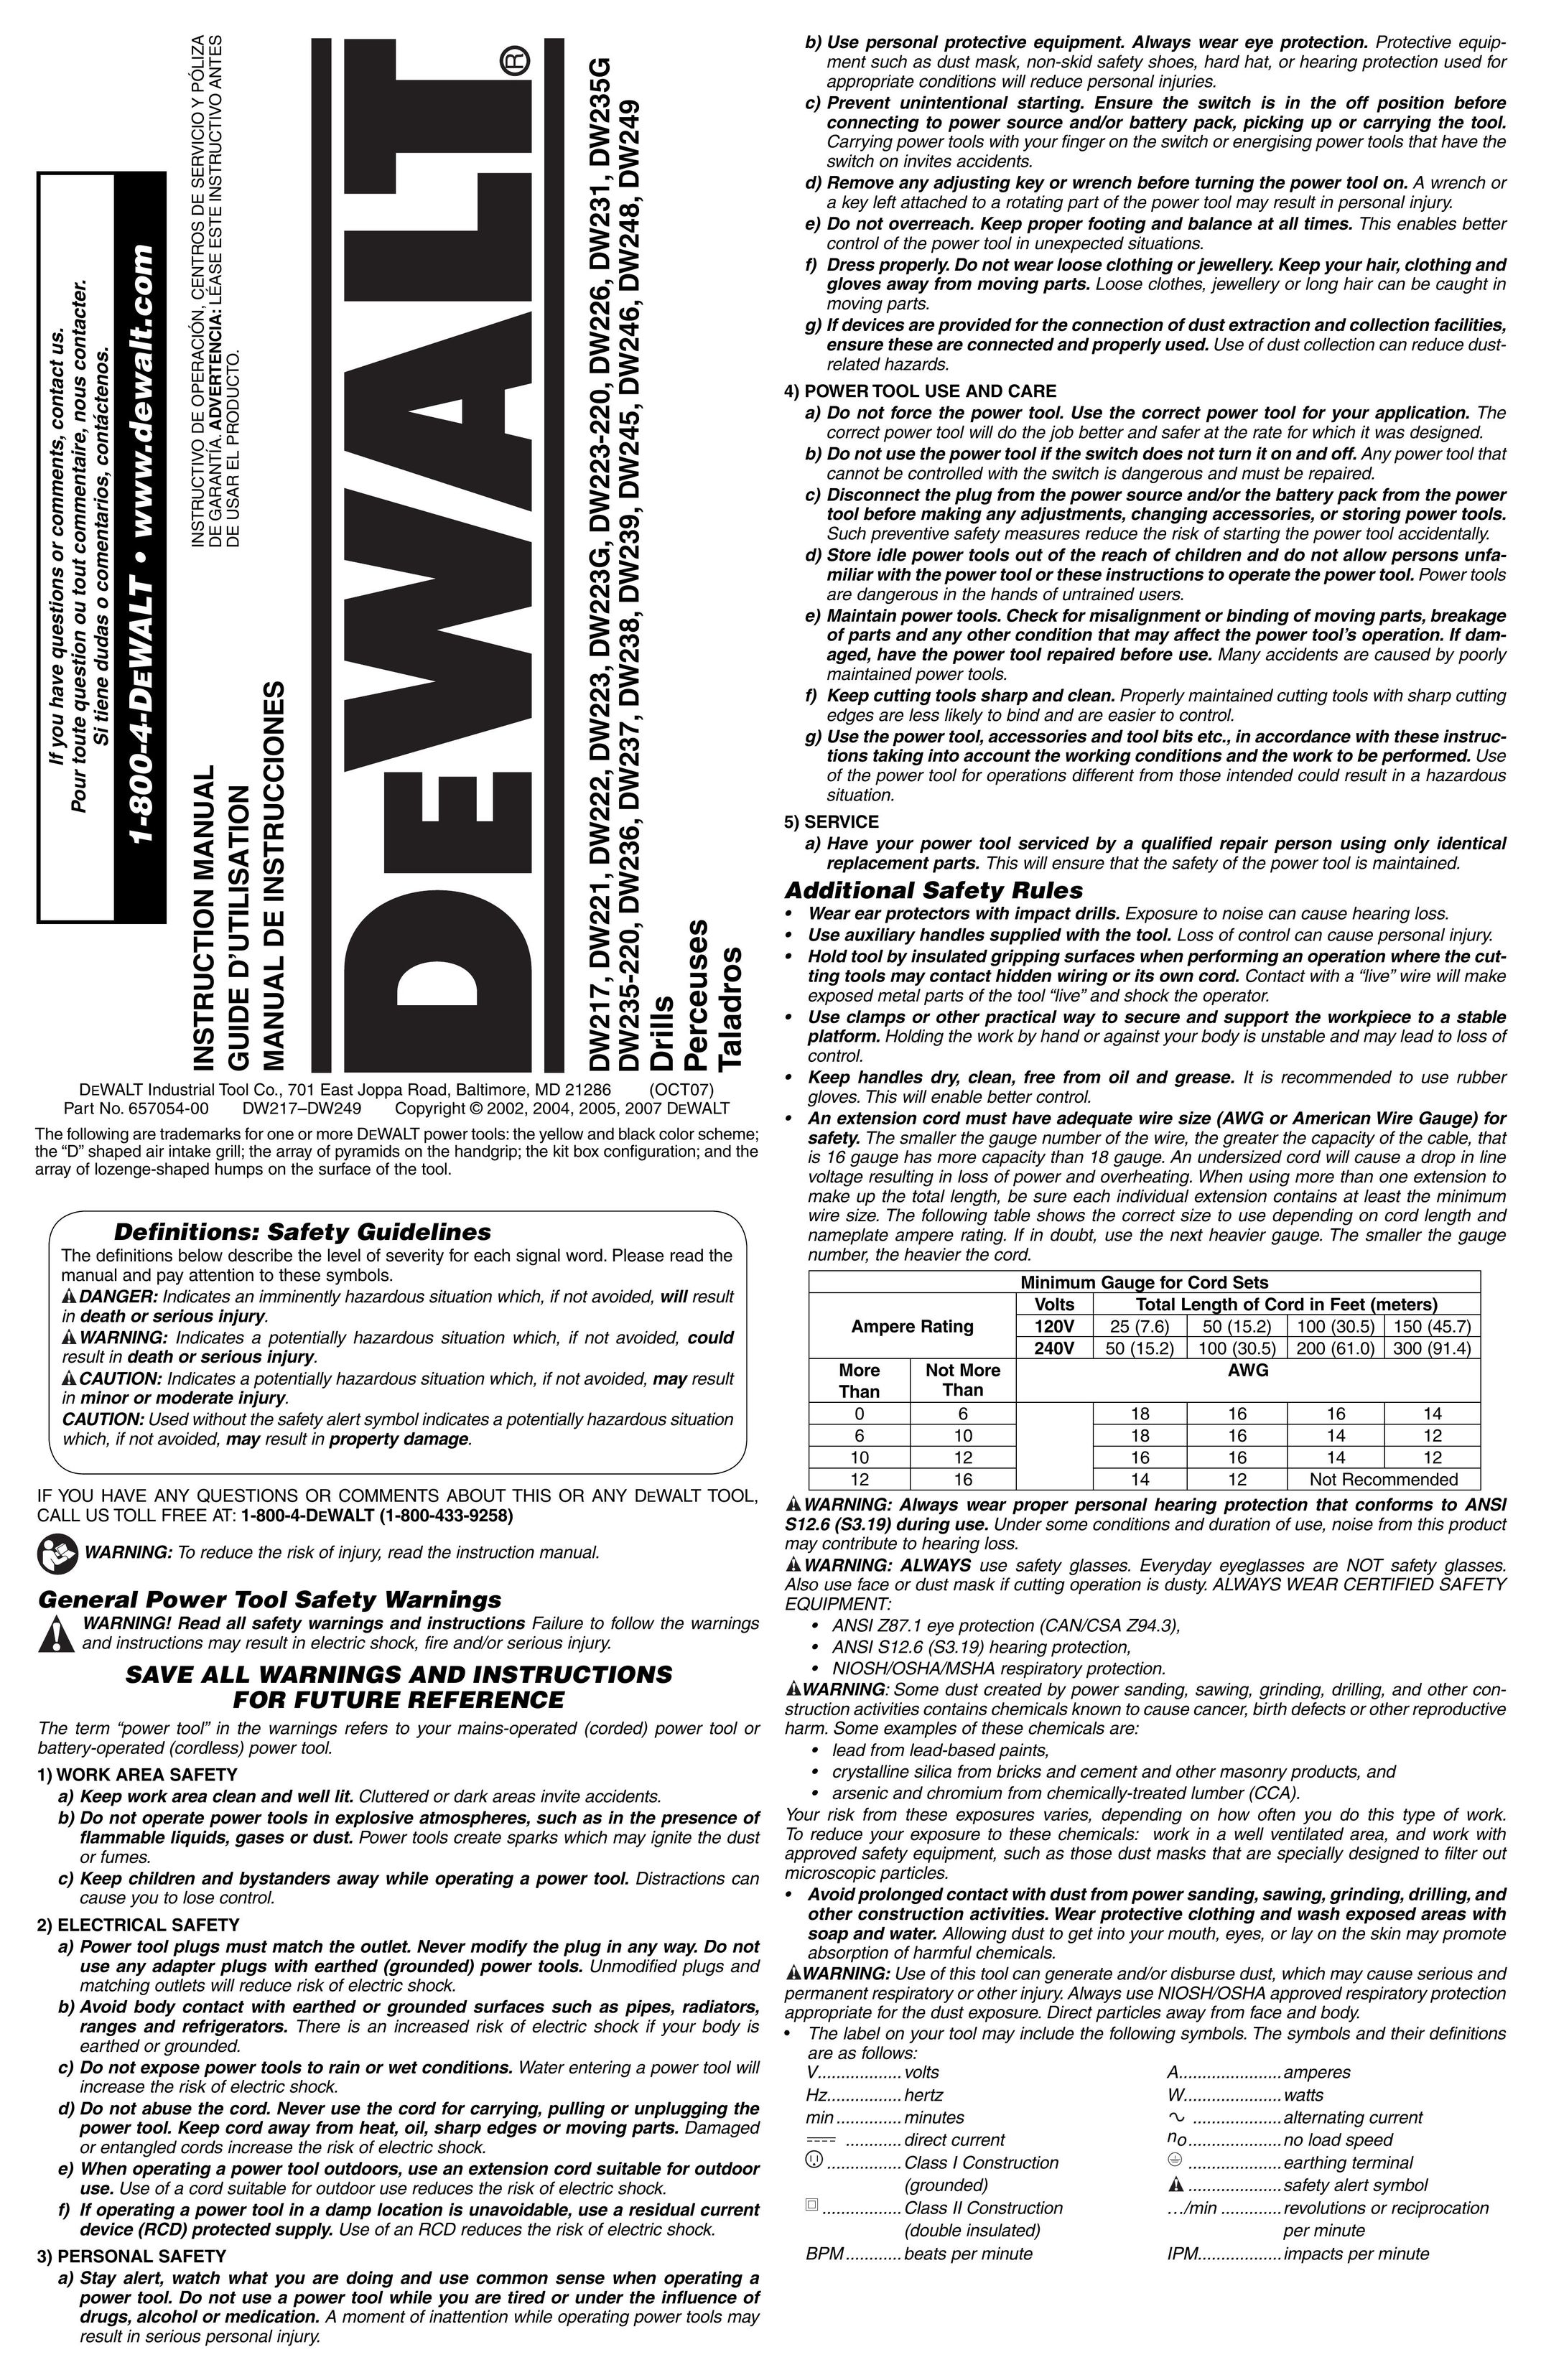 DeWalt DW235-220 Drill User Manual